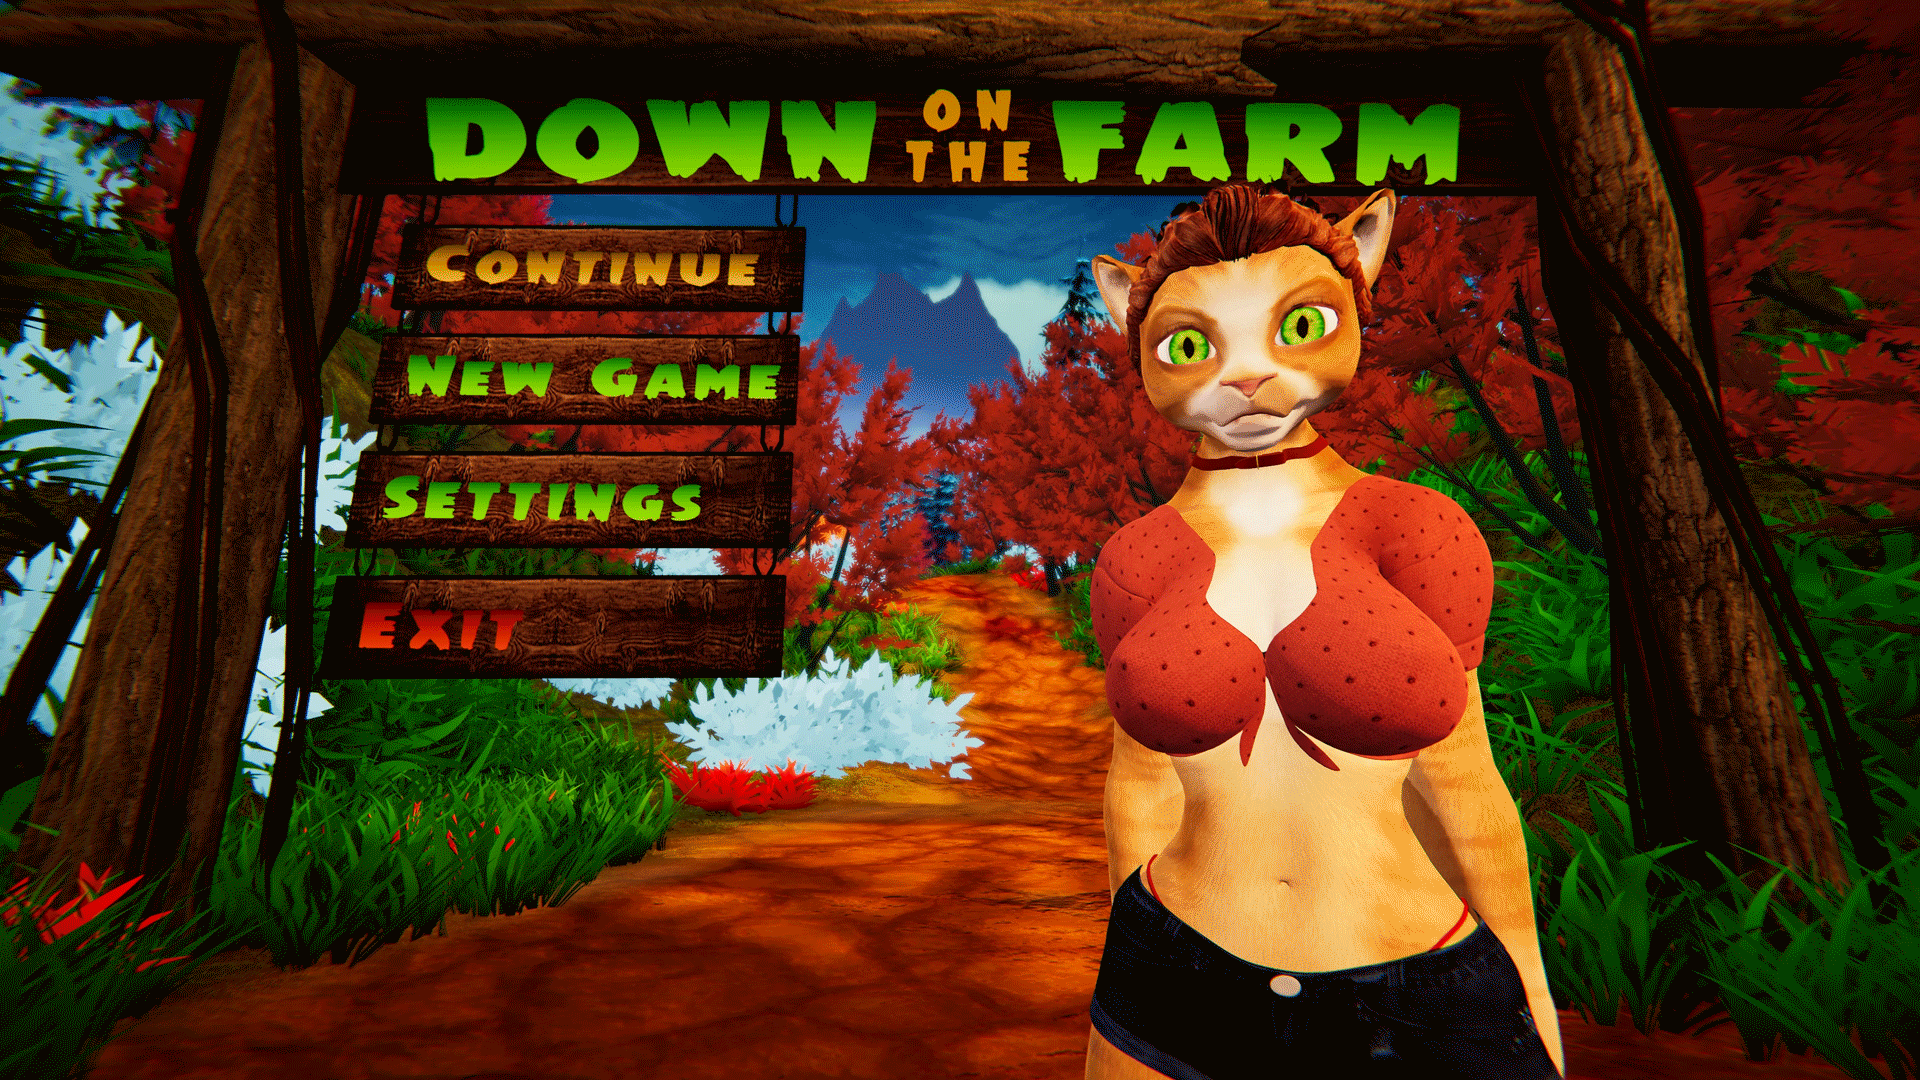 Furry Porn Barnyard Sex - Down On The Farm v0.1 Demo - free game download, reviews, mega - xGames